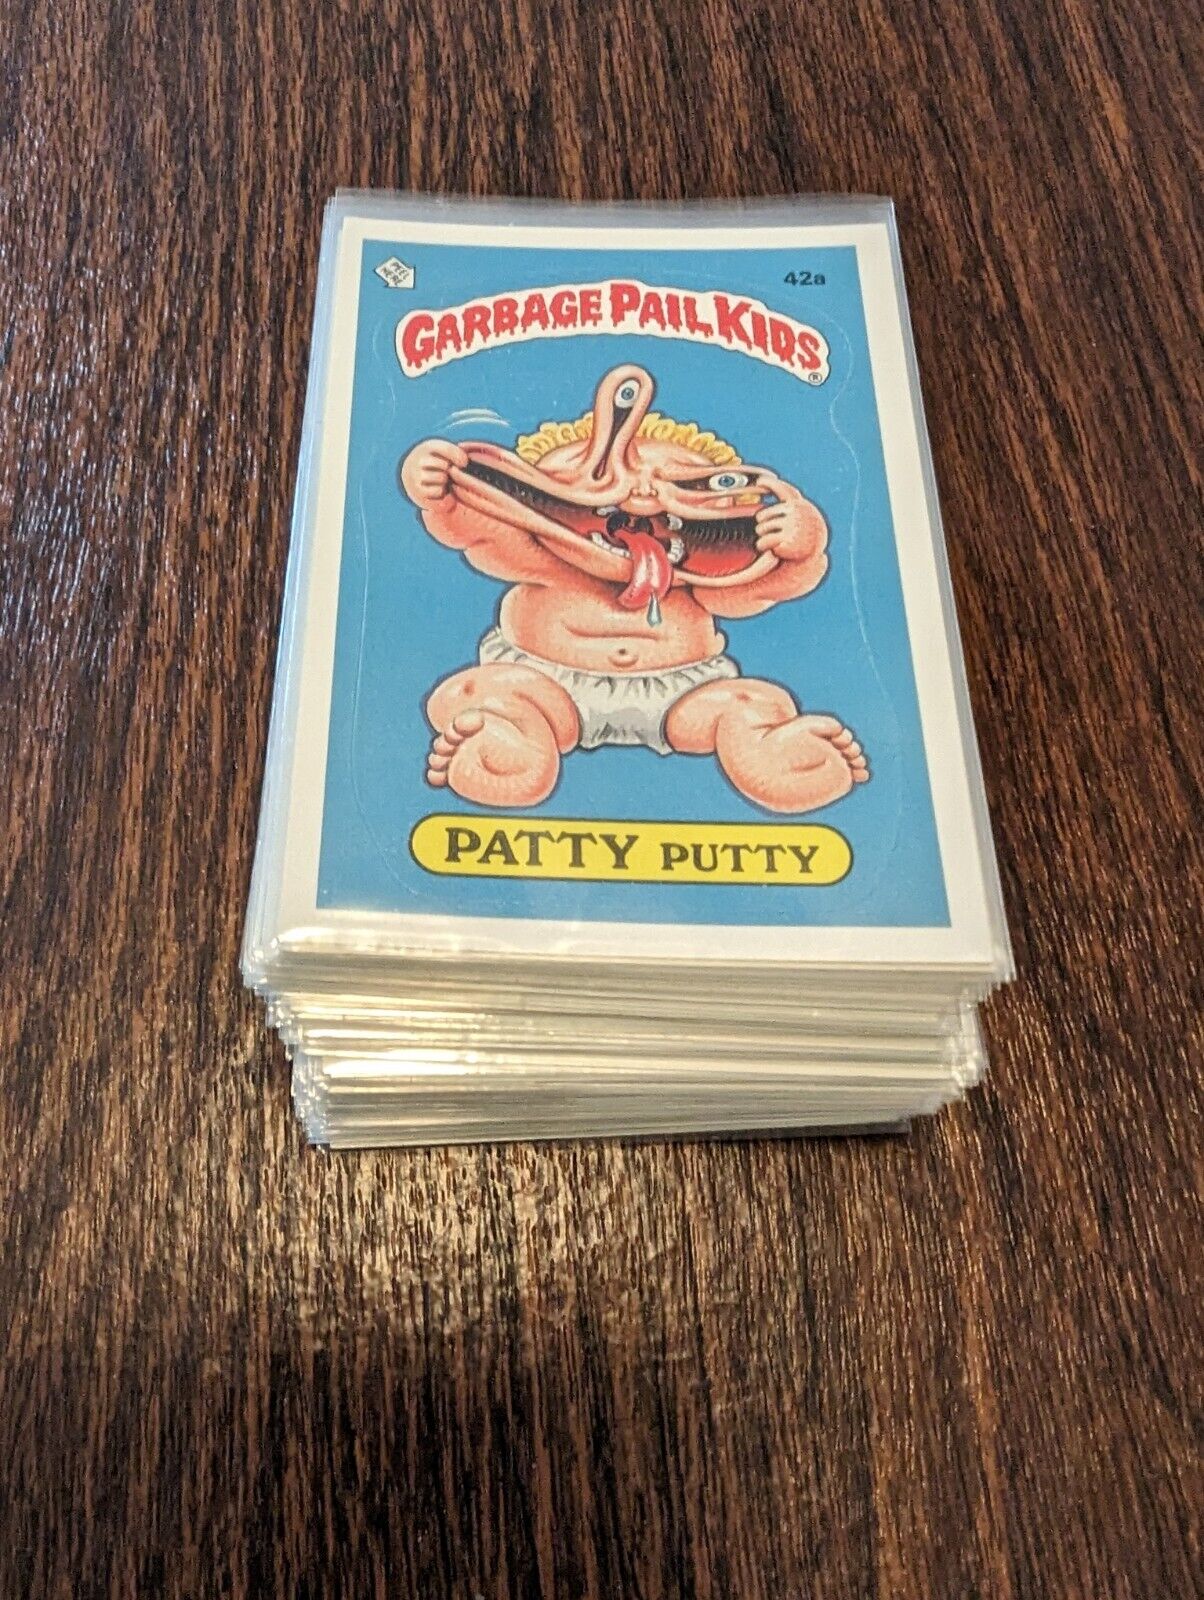 Original VinGarbage Pail Kids Near Complete Series 2 Set. Missing 6 Cards. Nice